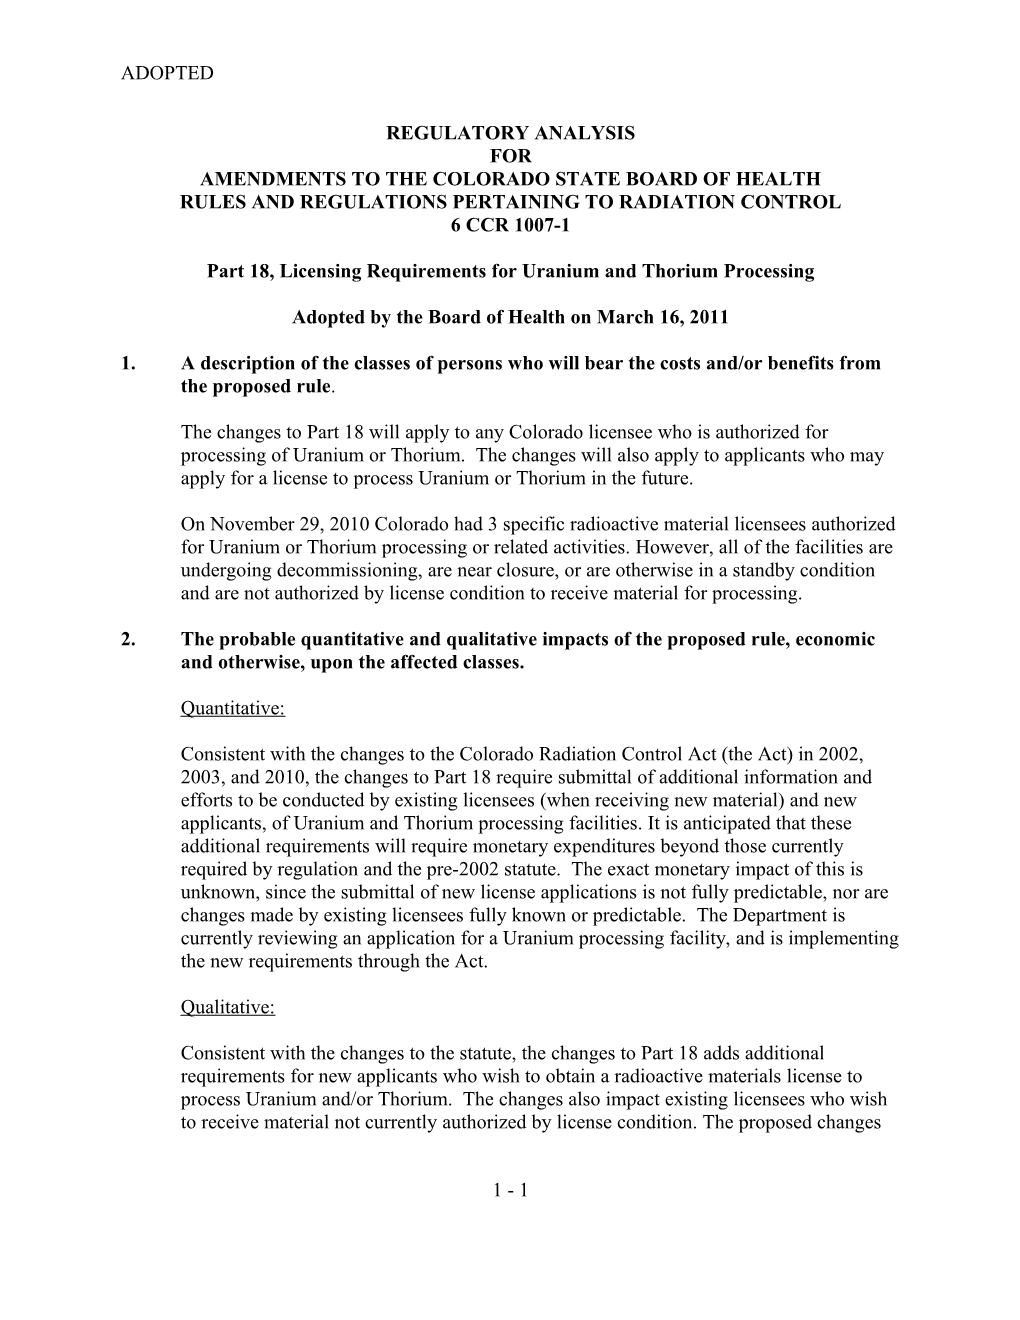 Amendments to the Colorado State Board of Health